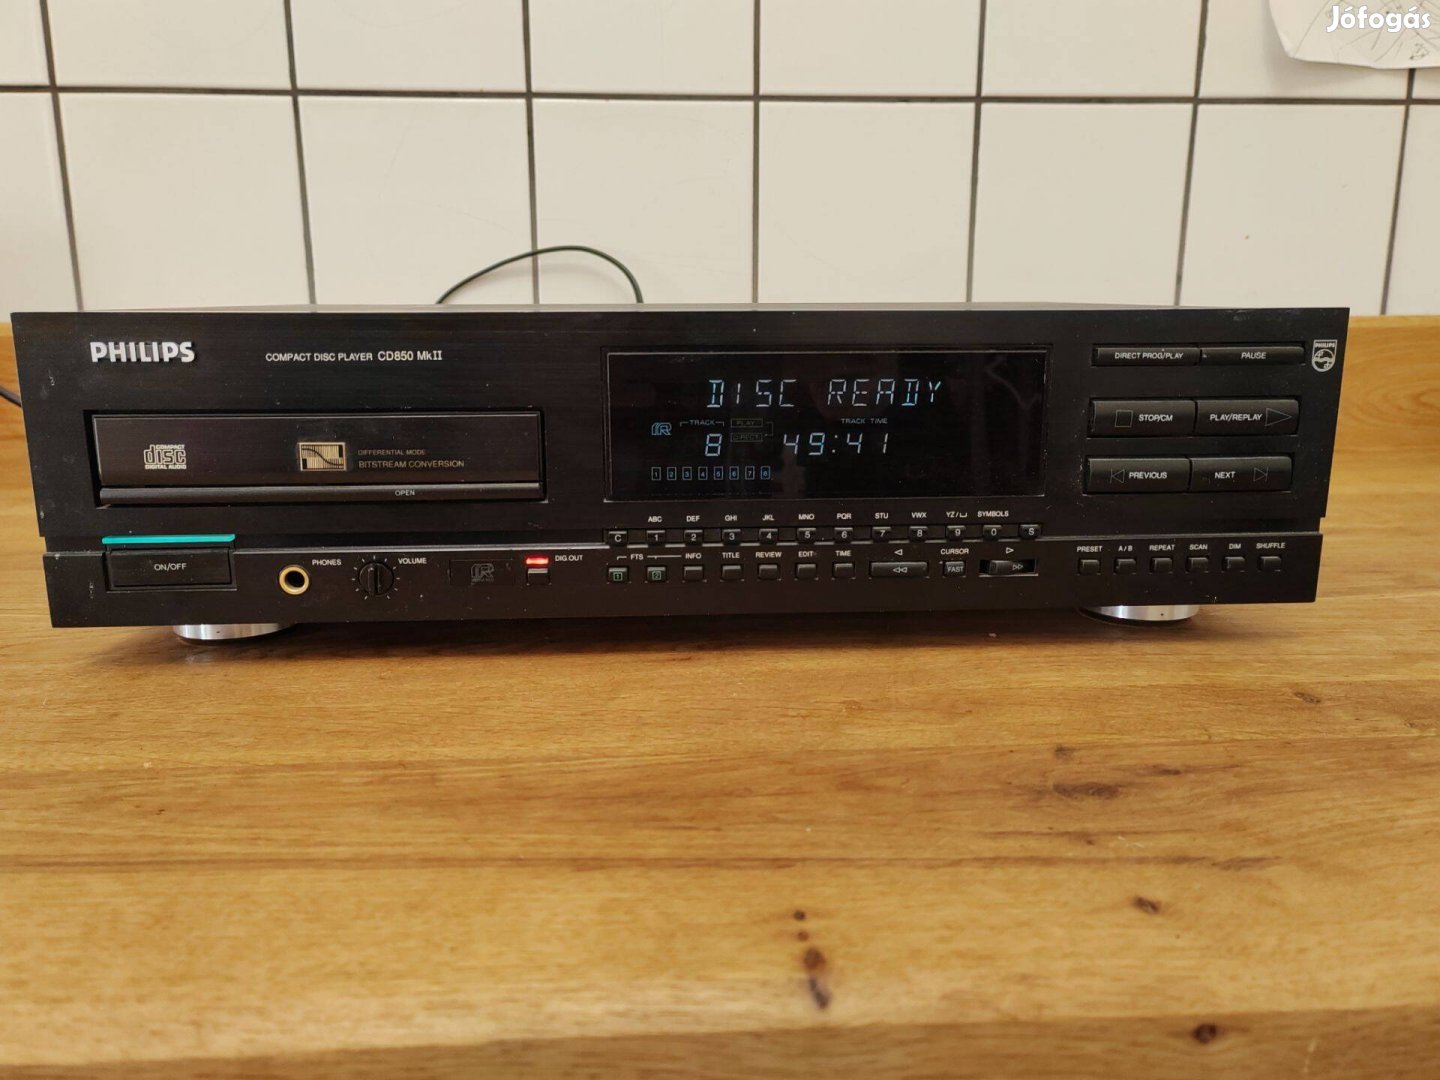 Philips Cd-850 mkii cd lejátszó